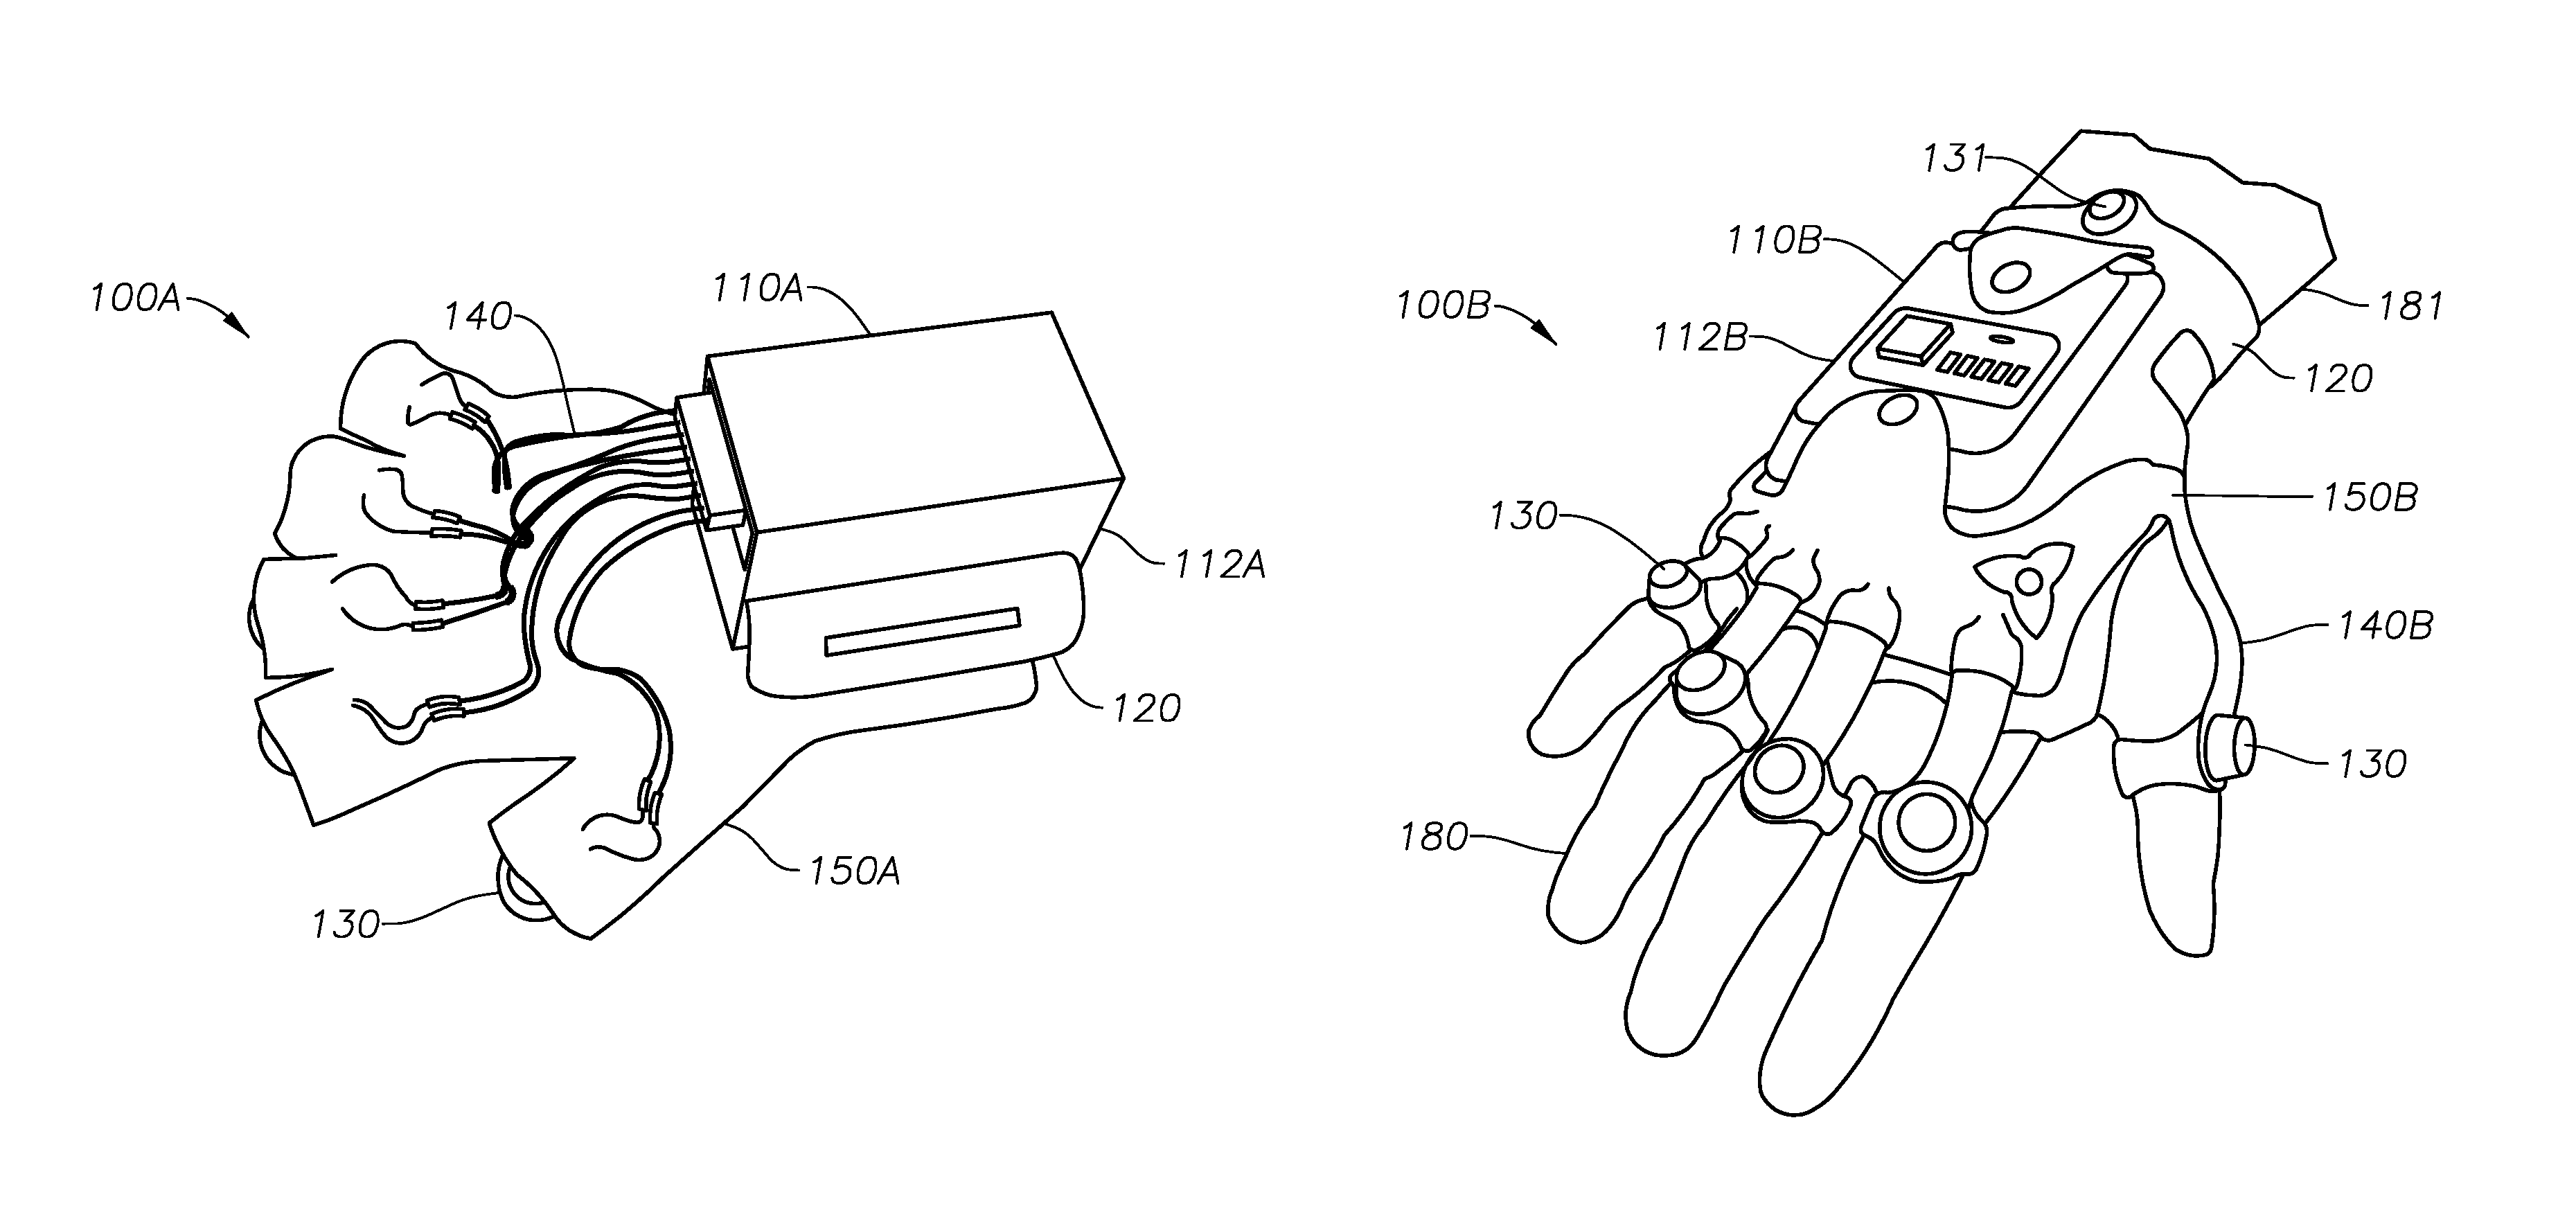 Portable hand rehabilitation device